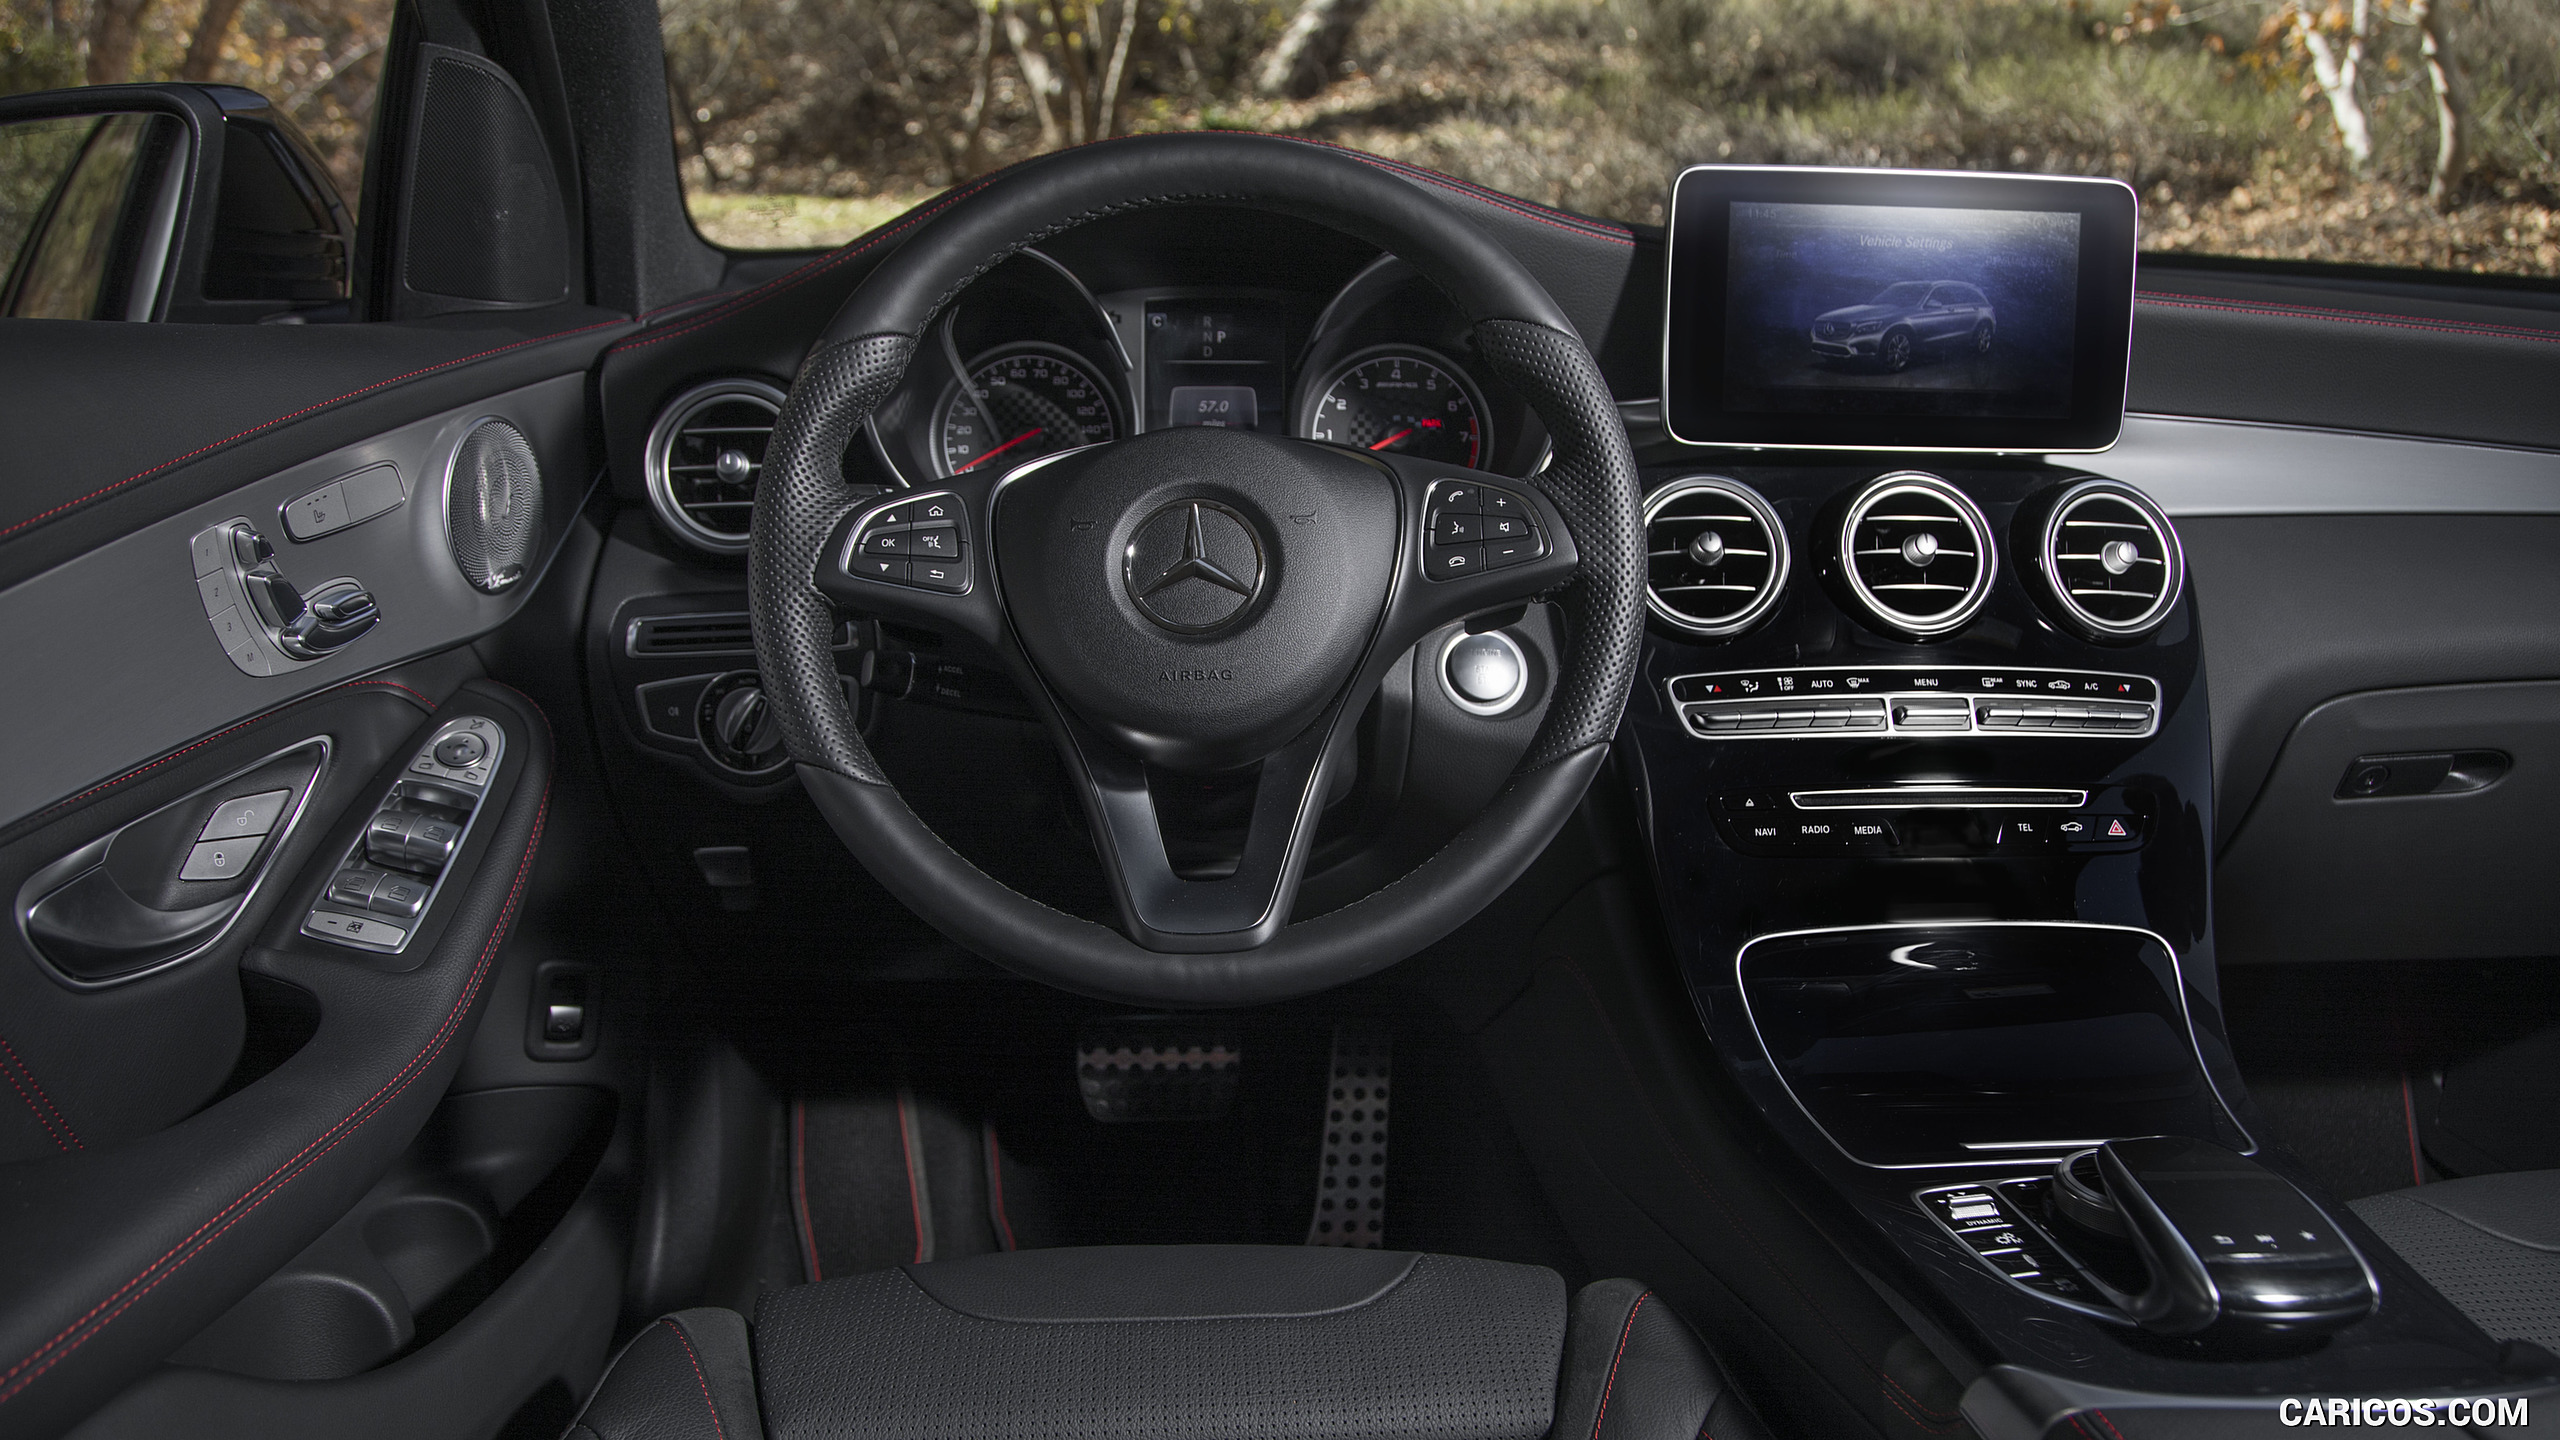 2017 Mercedes-AMG GLC 43 (US-Spec) - Interior, Cockpit, #103 of 108